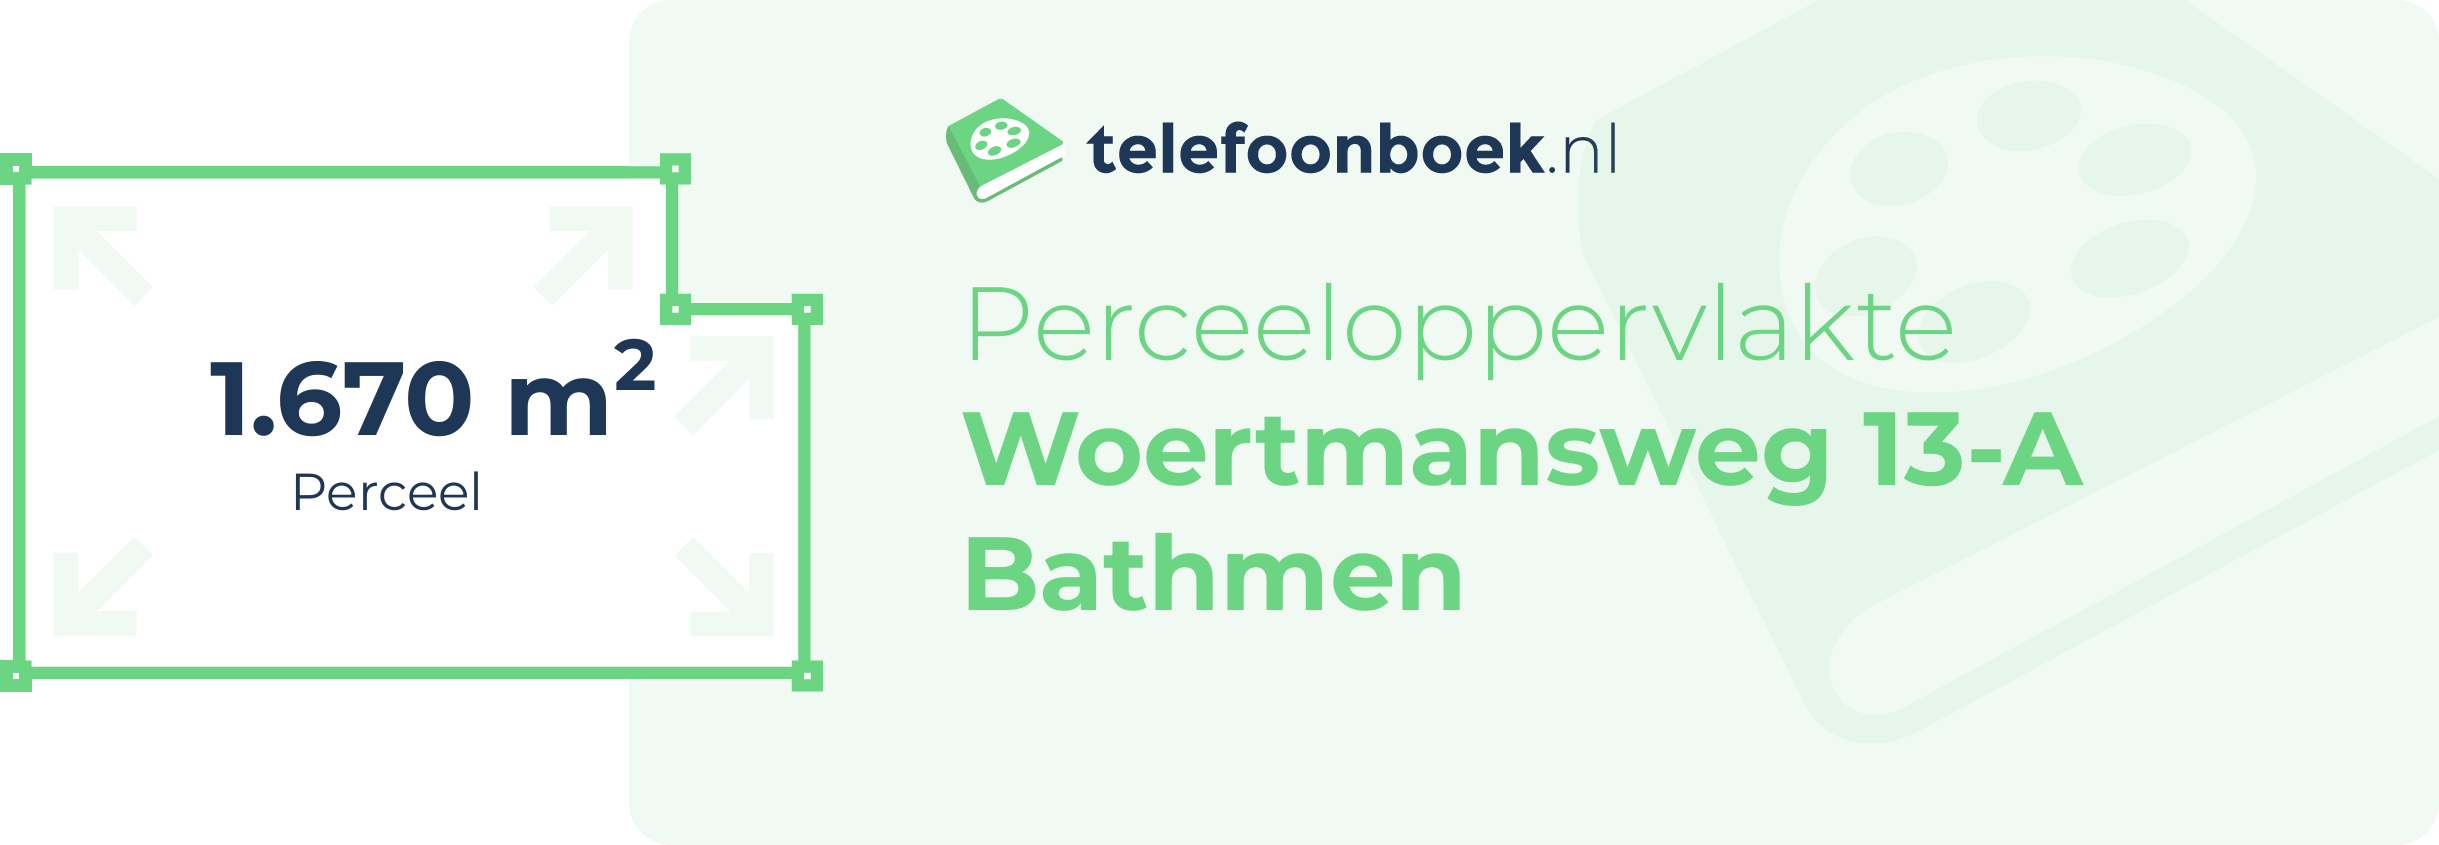 Perceeloppervlakte Woertmansweg 13-A Bathmen